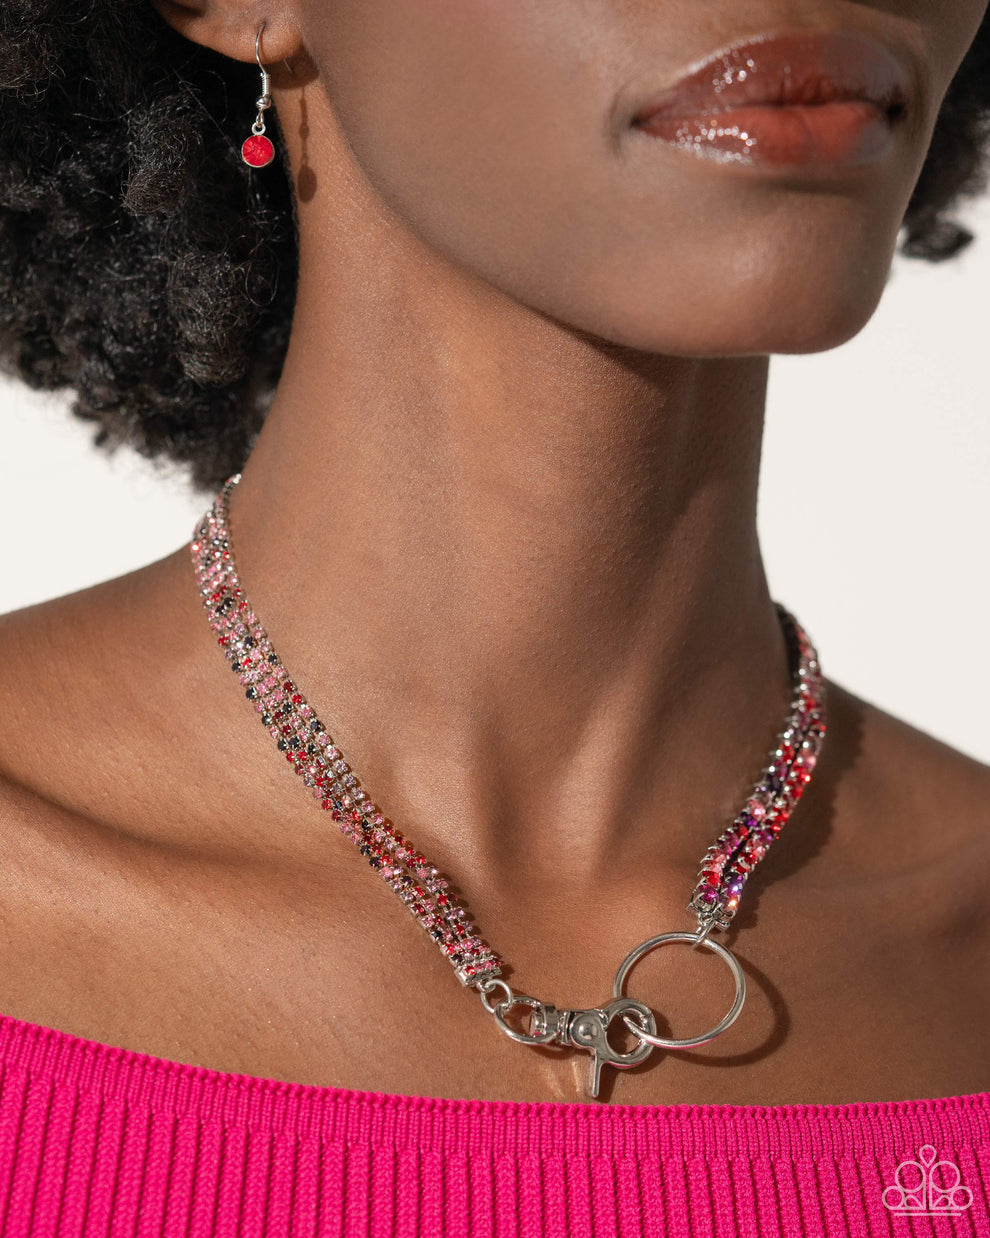 Paparazzi Chic Connection - Red Necklace & Paparazzi Serendipitous Strands - Red Bracelet Set